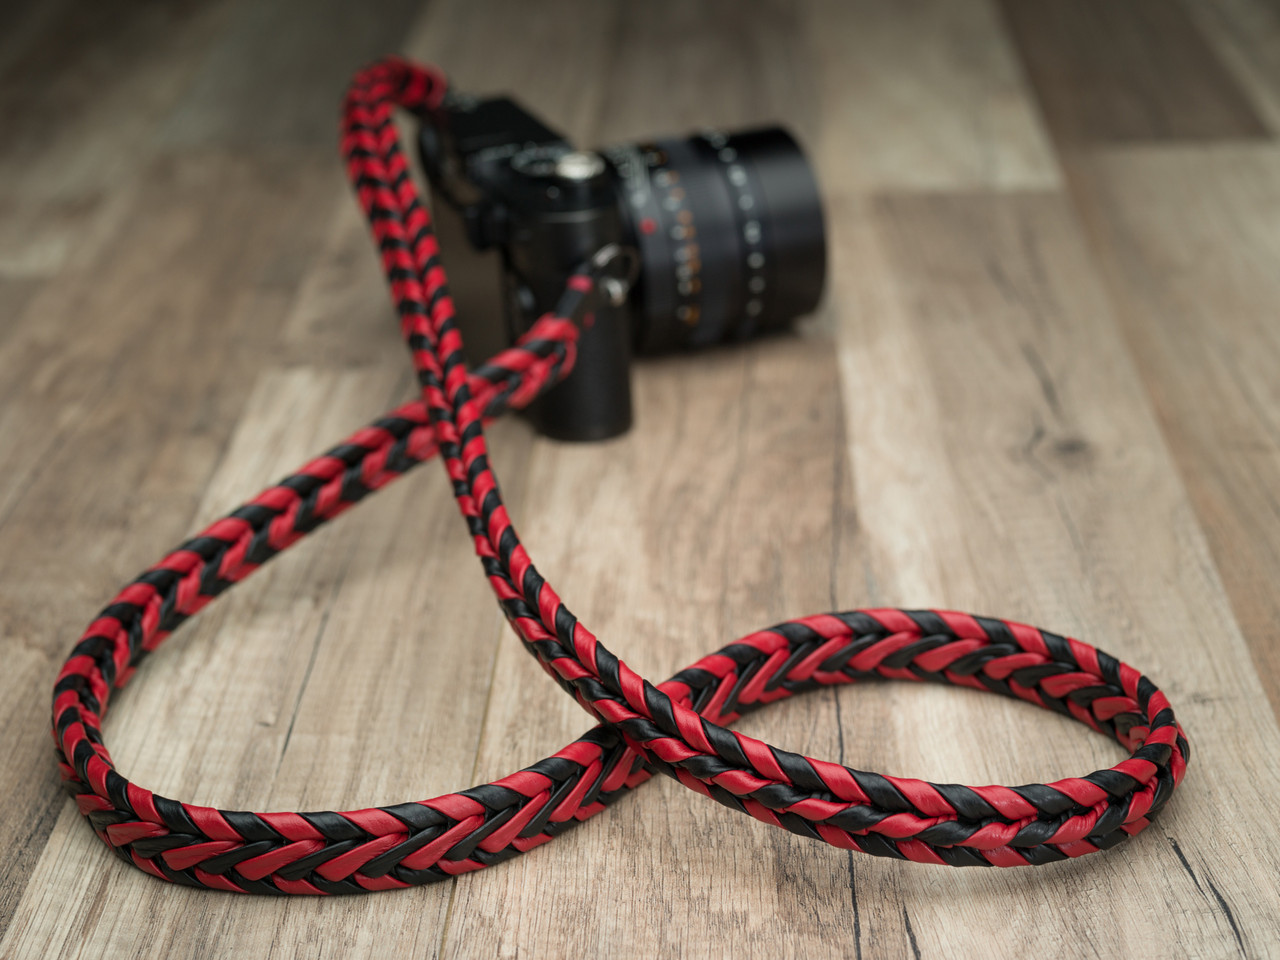 Full Braided Leather Camera Strap – Βokeh Camera Straps